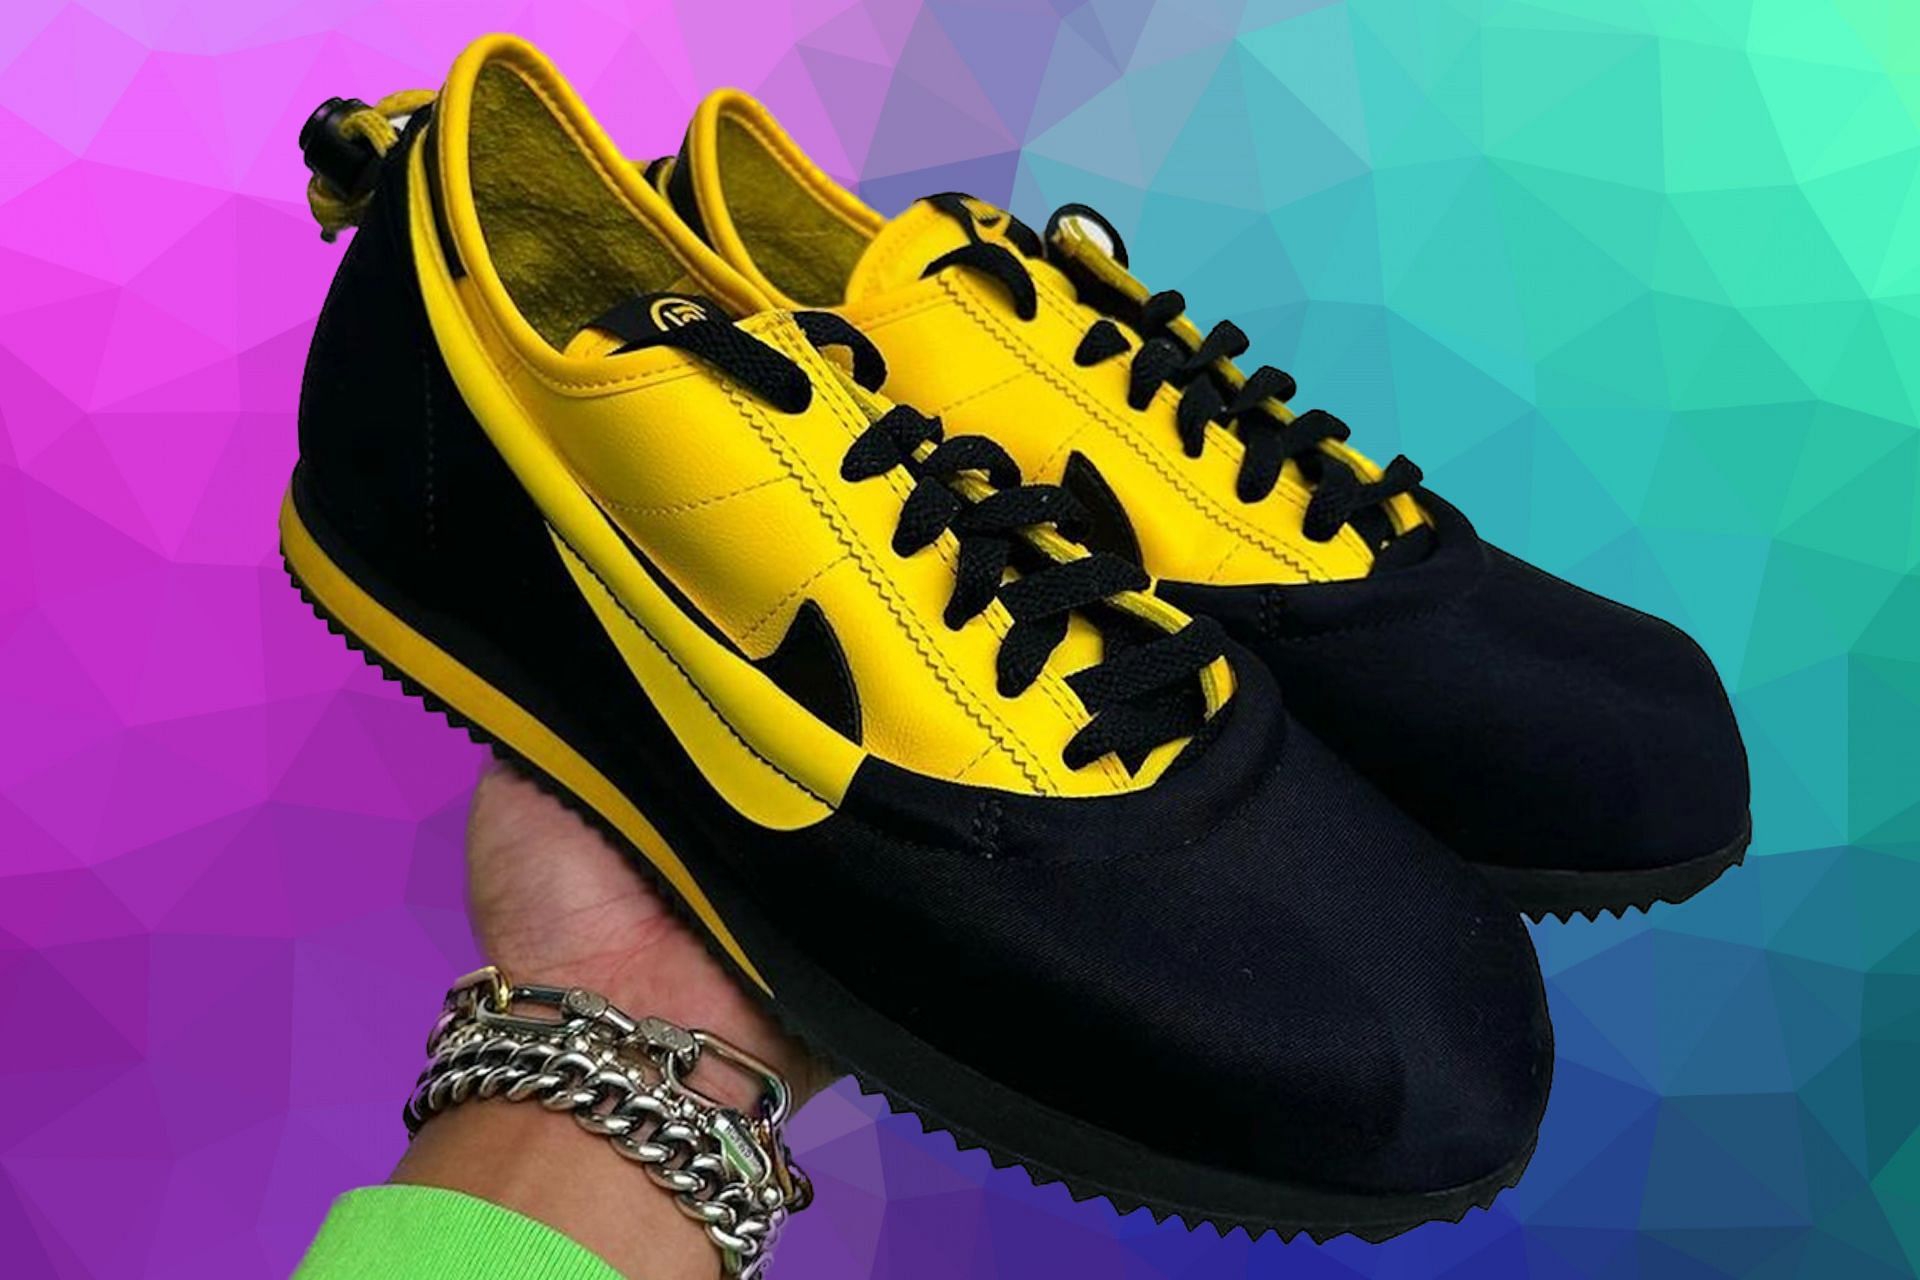 CLOT x Nike Clotez Black/Varsity Maize shoes (Image via Instagram/@whojungwoo)